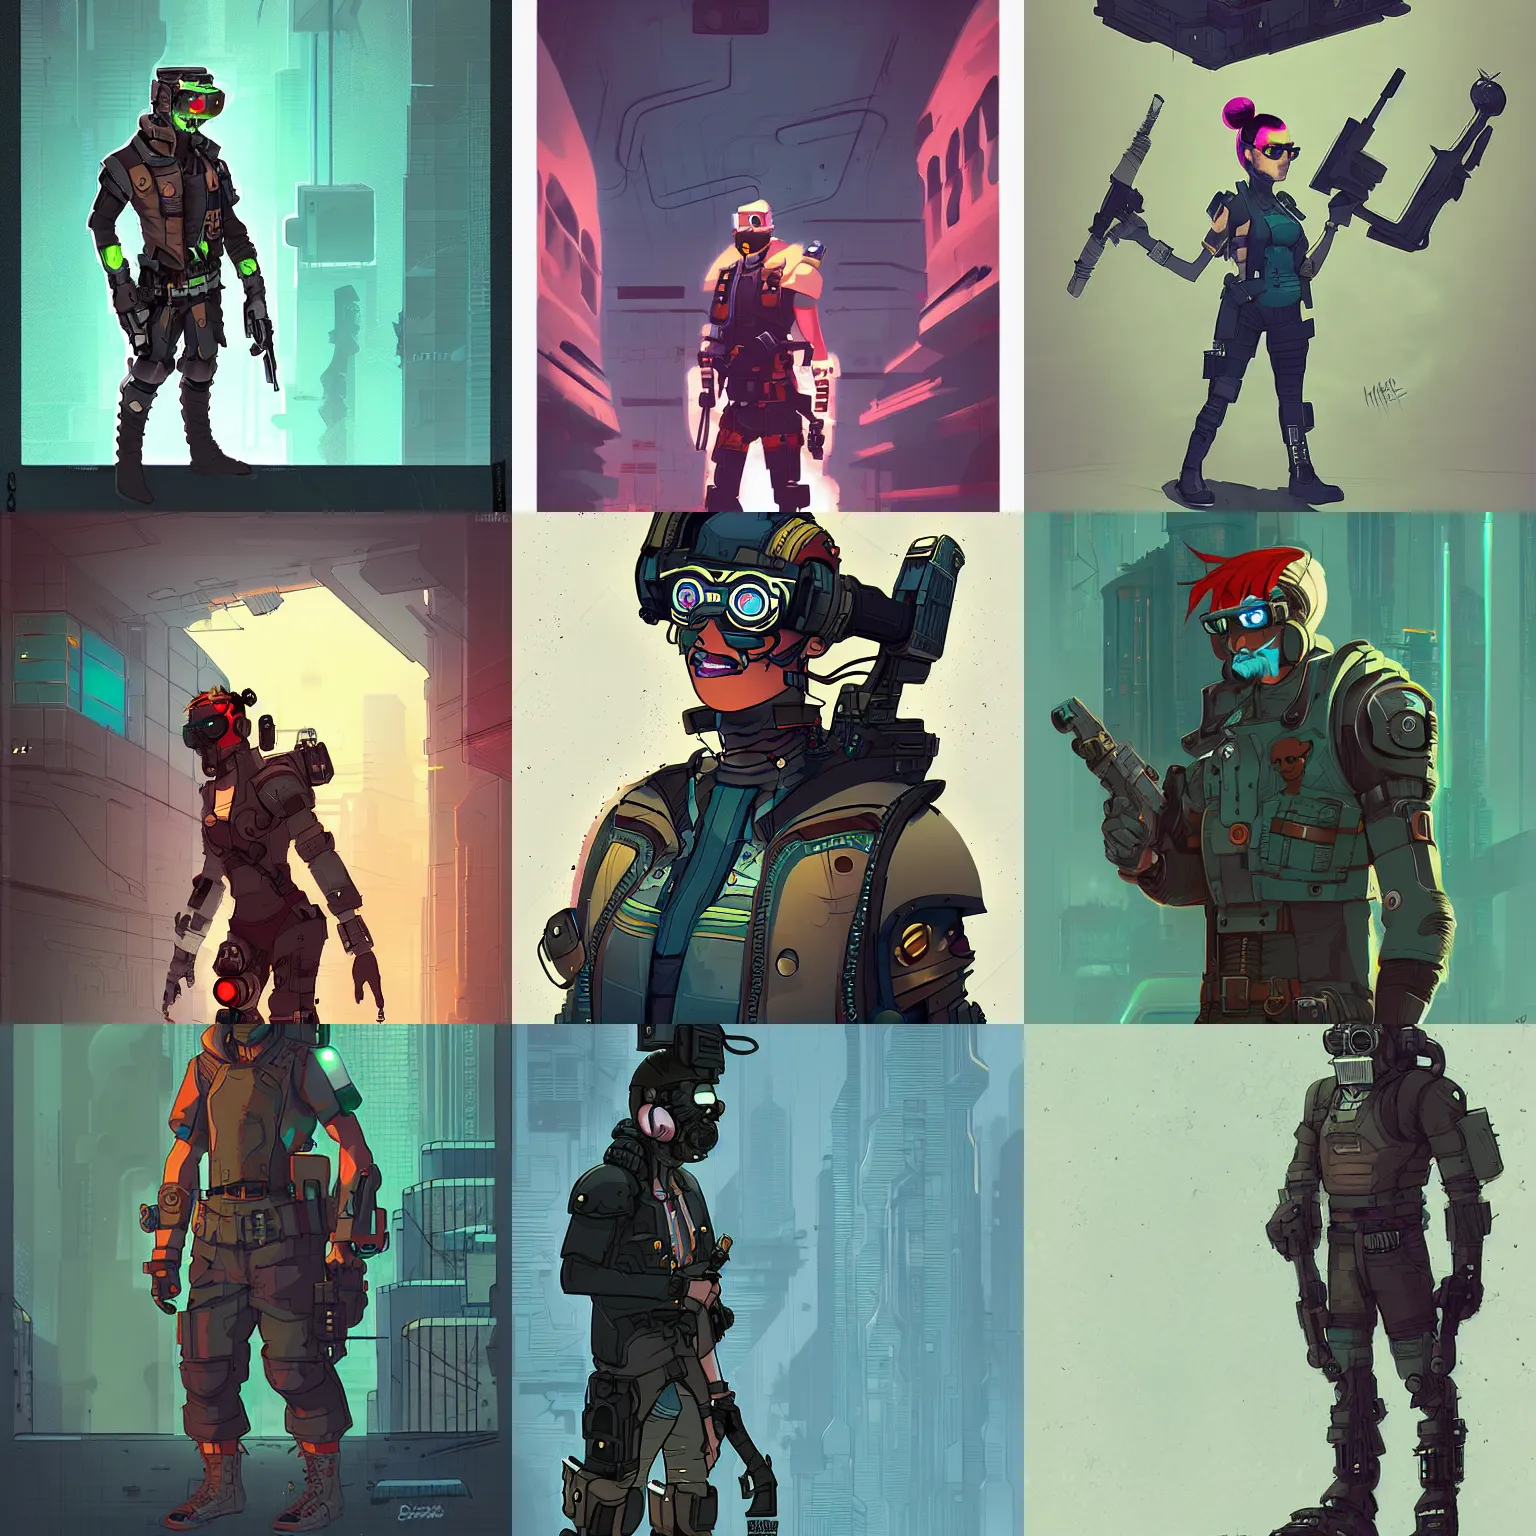 Prompt: cyberpunk mercenary by cory loftis